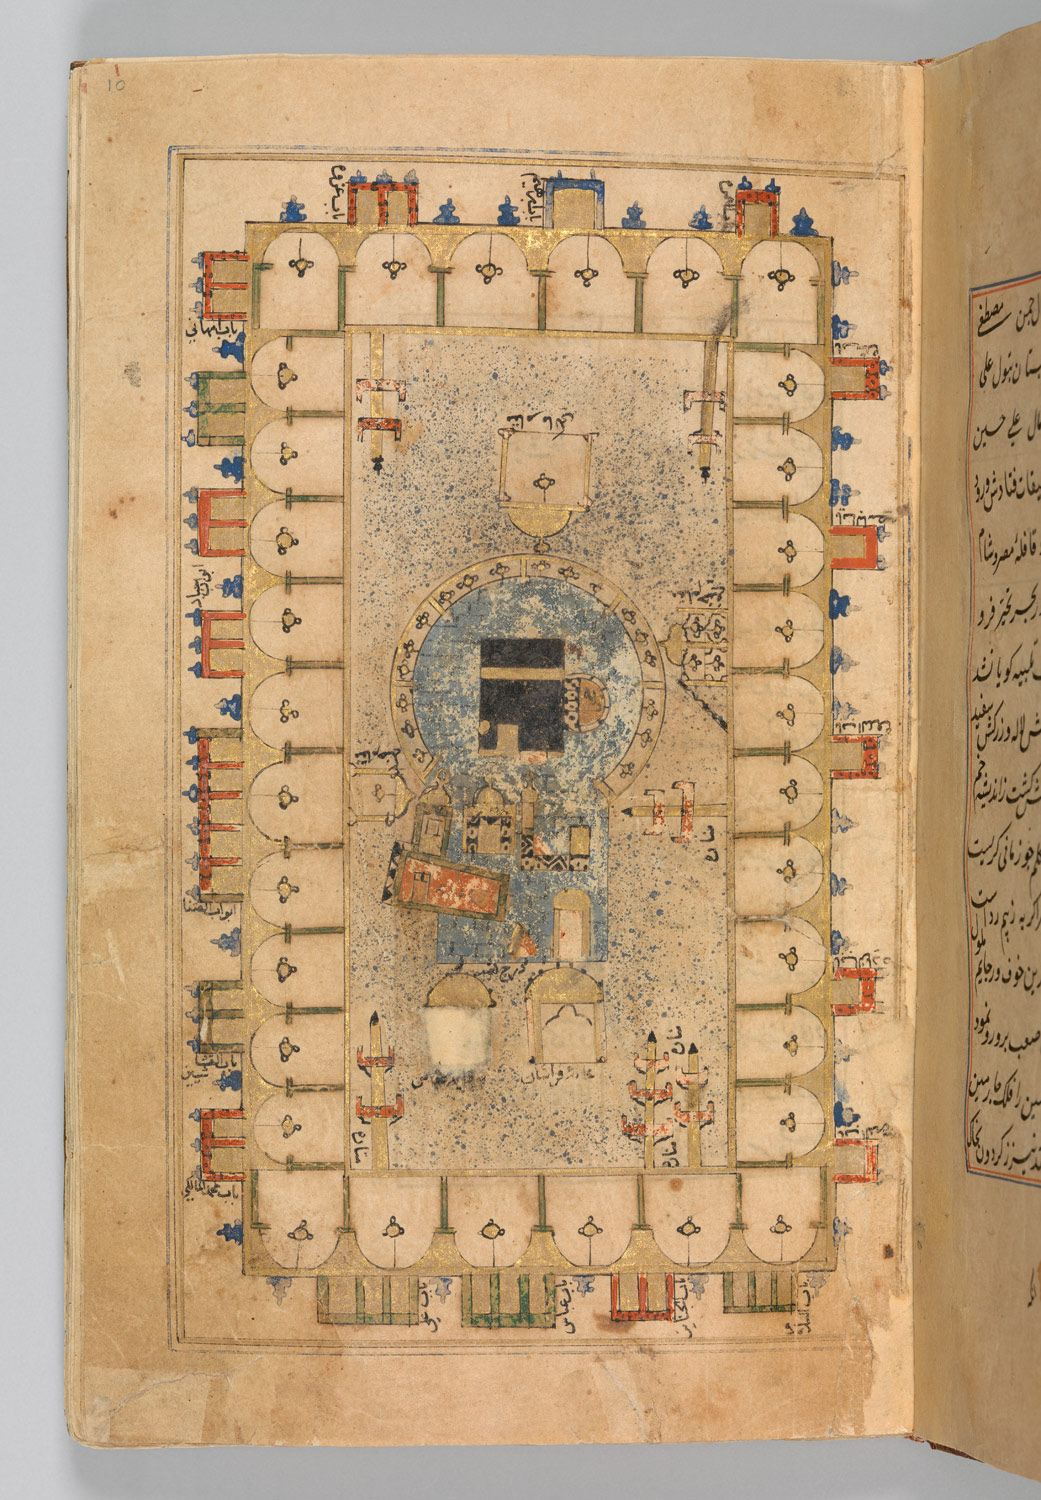 Futuh al-Haramain (Description of the Holy Cities)